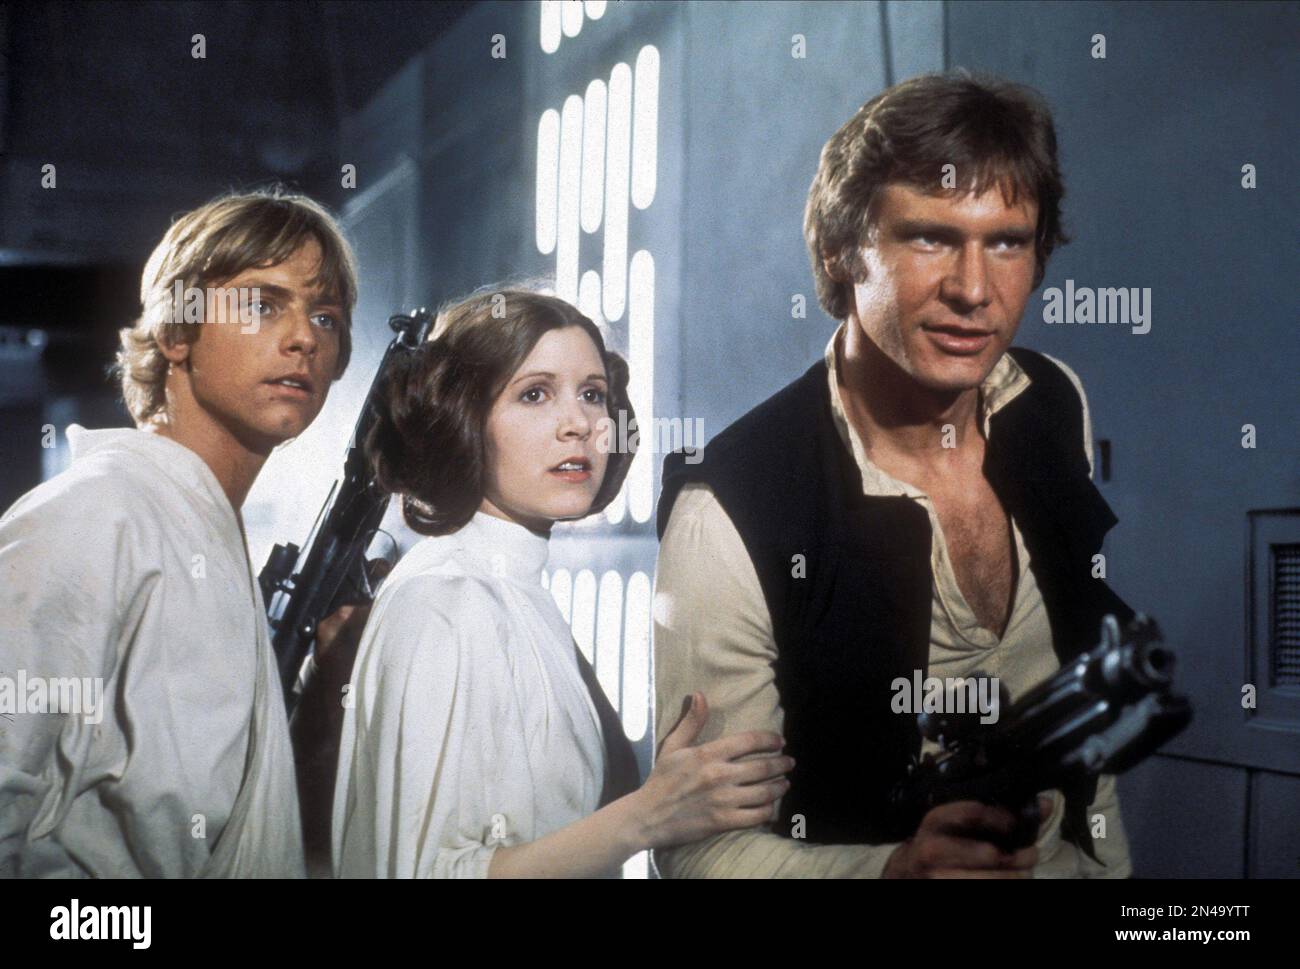 Star Wars  Star Wars Episode IV : A New Hope  Mark Hamill, Carrie Fisher & Harrison Ford  Luke Skywalker, Princess Leia, Han Solo Stock Photo